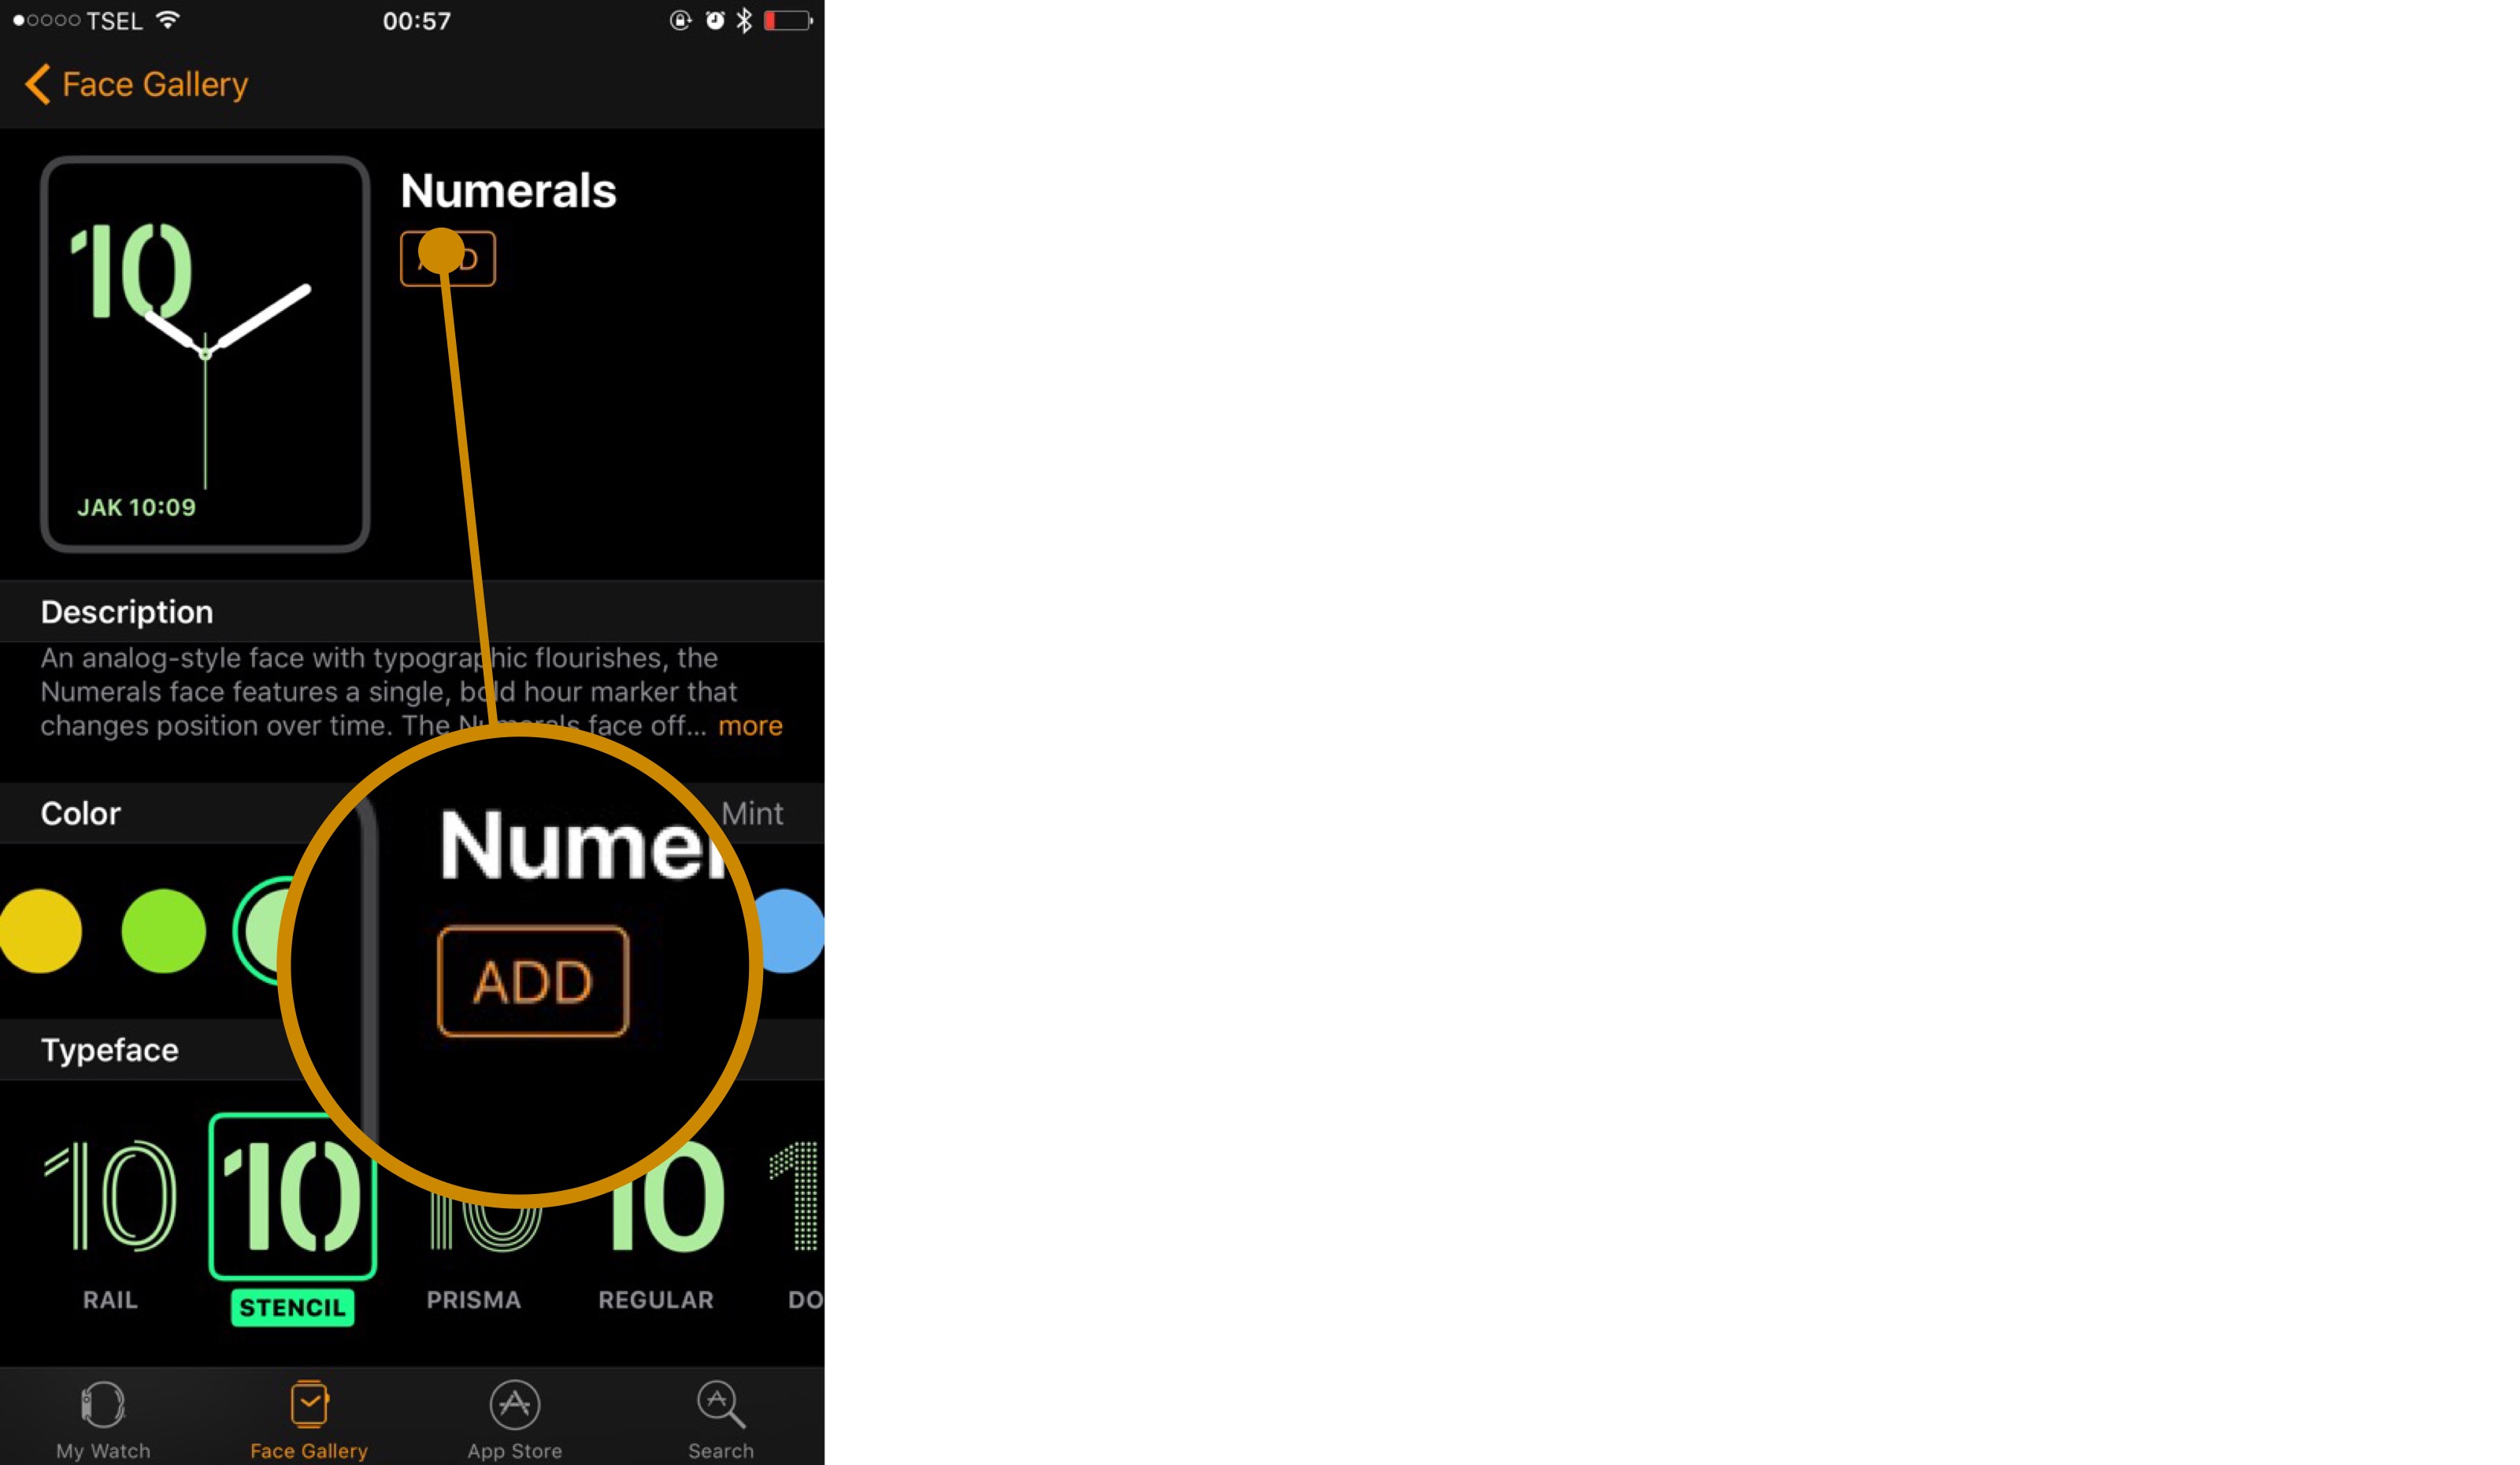 Mengelola watch face lewat aplikasi Watch di iOS 10